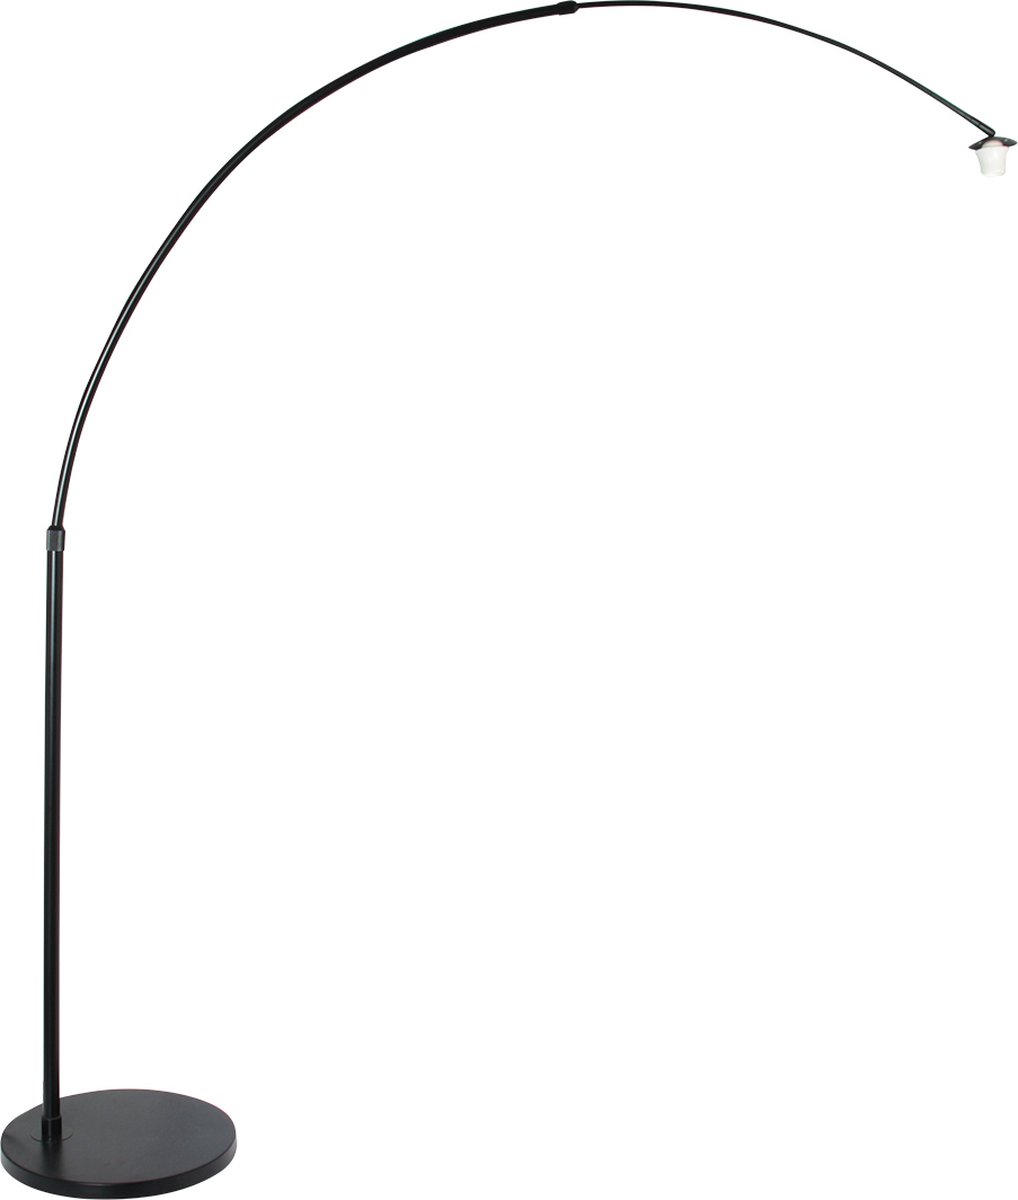 Vloerlamp - Bussandri Limited - Modern - Metaal - Modern - E27 - L: 160cm - Voor Binnen - Woonkamer - Eetkamer - Zwart